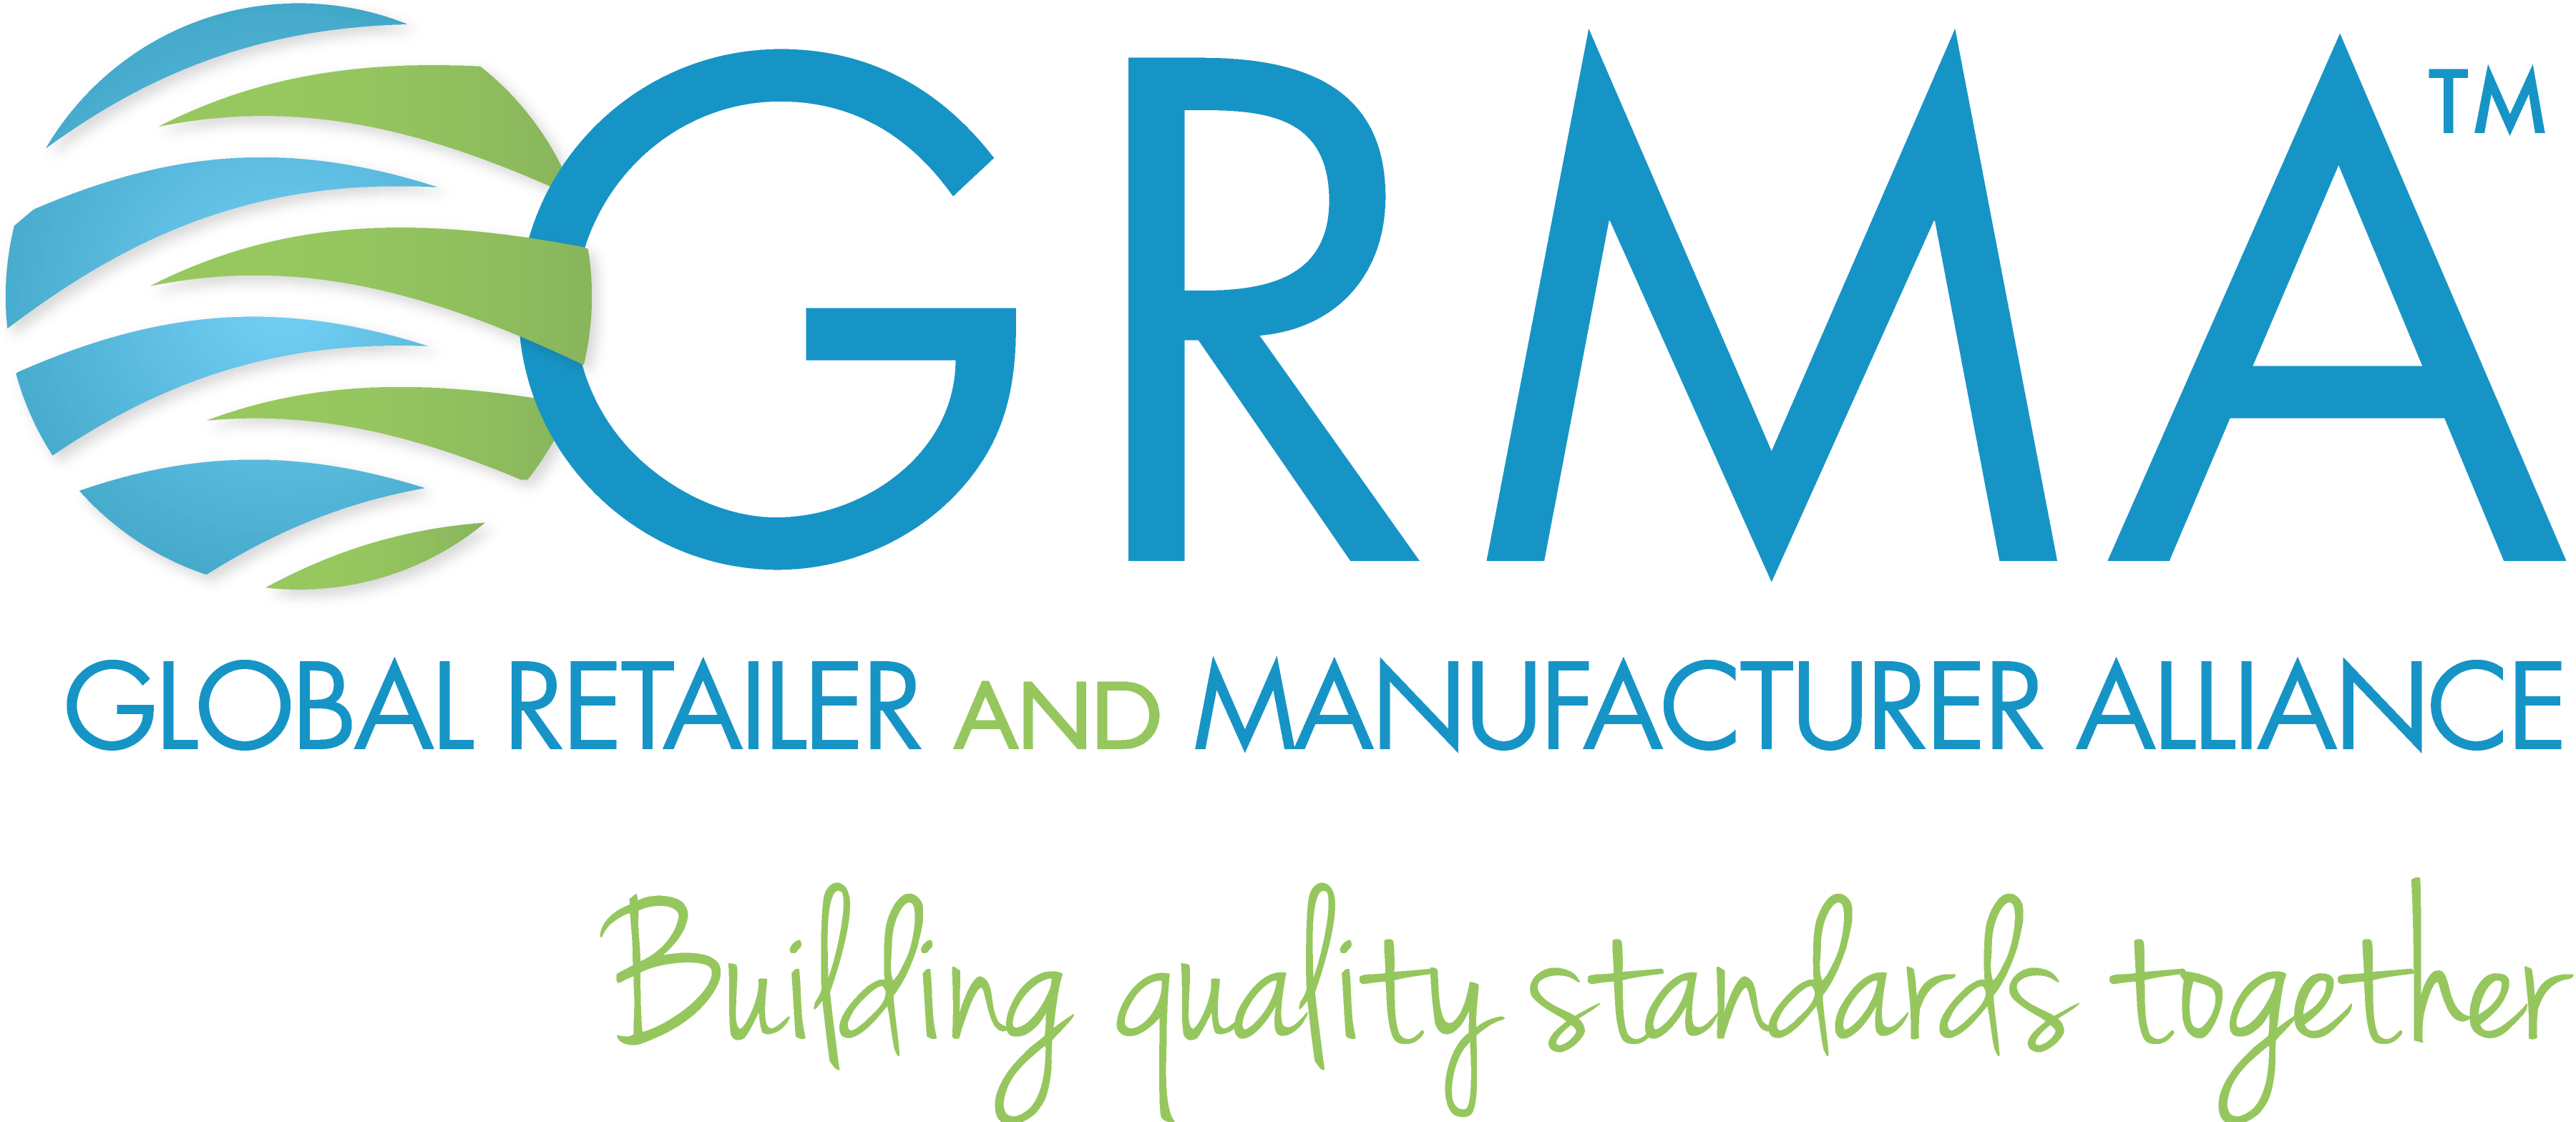 GRMA logo